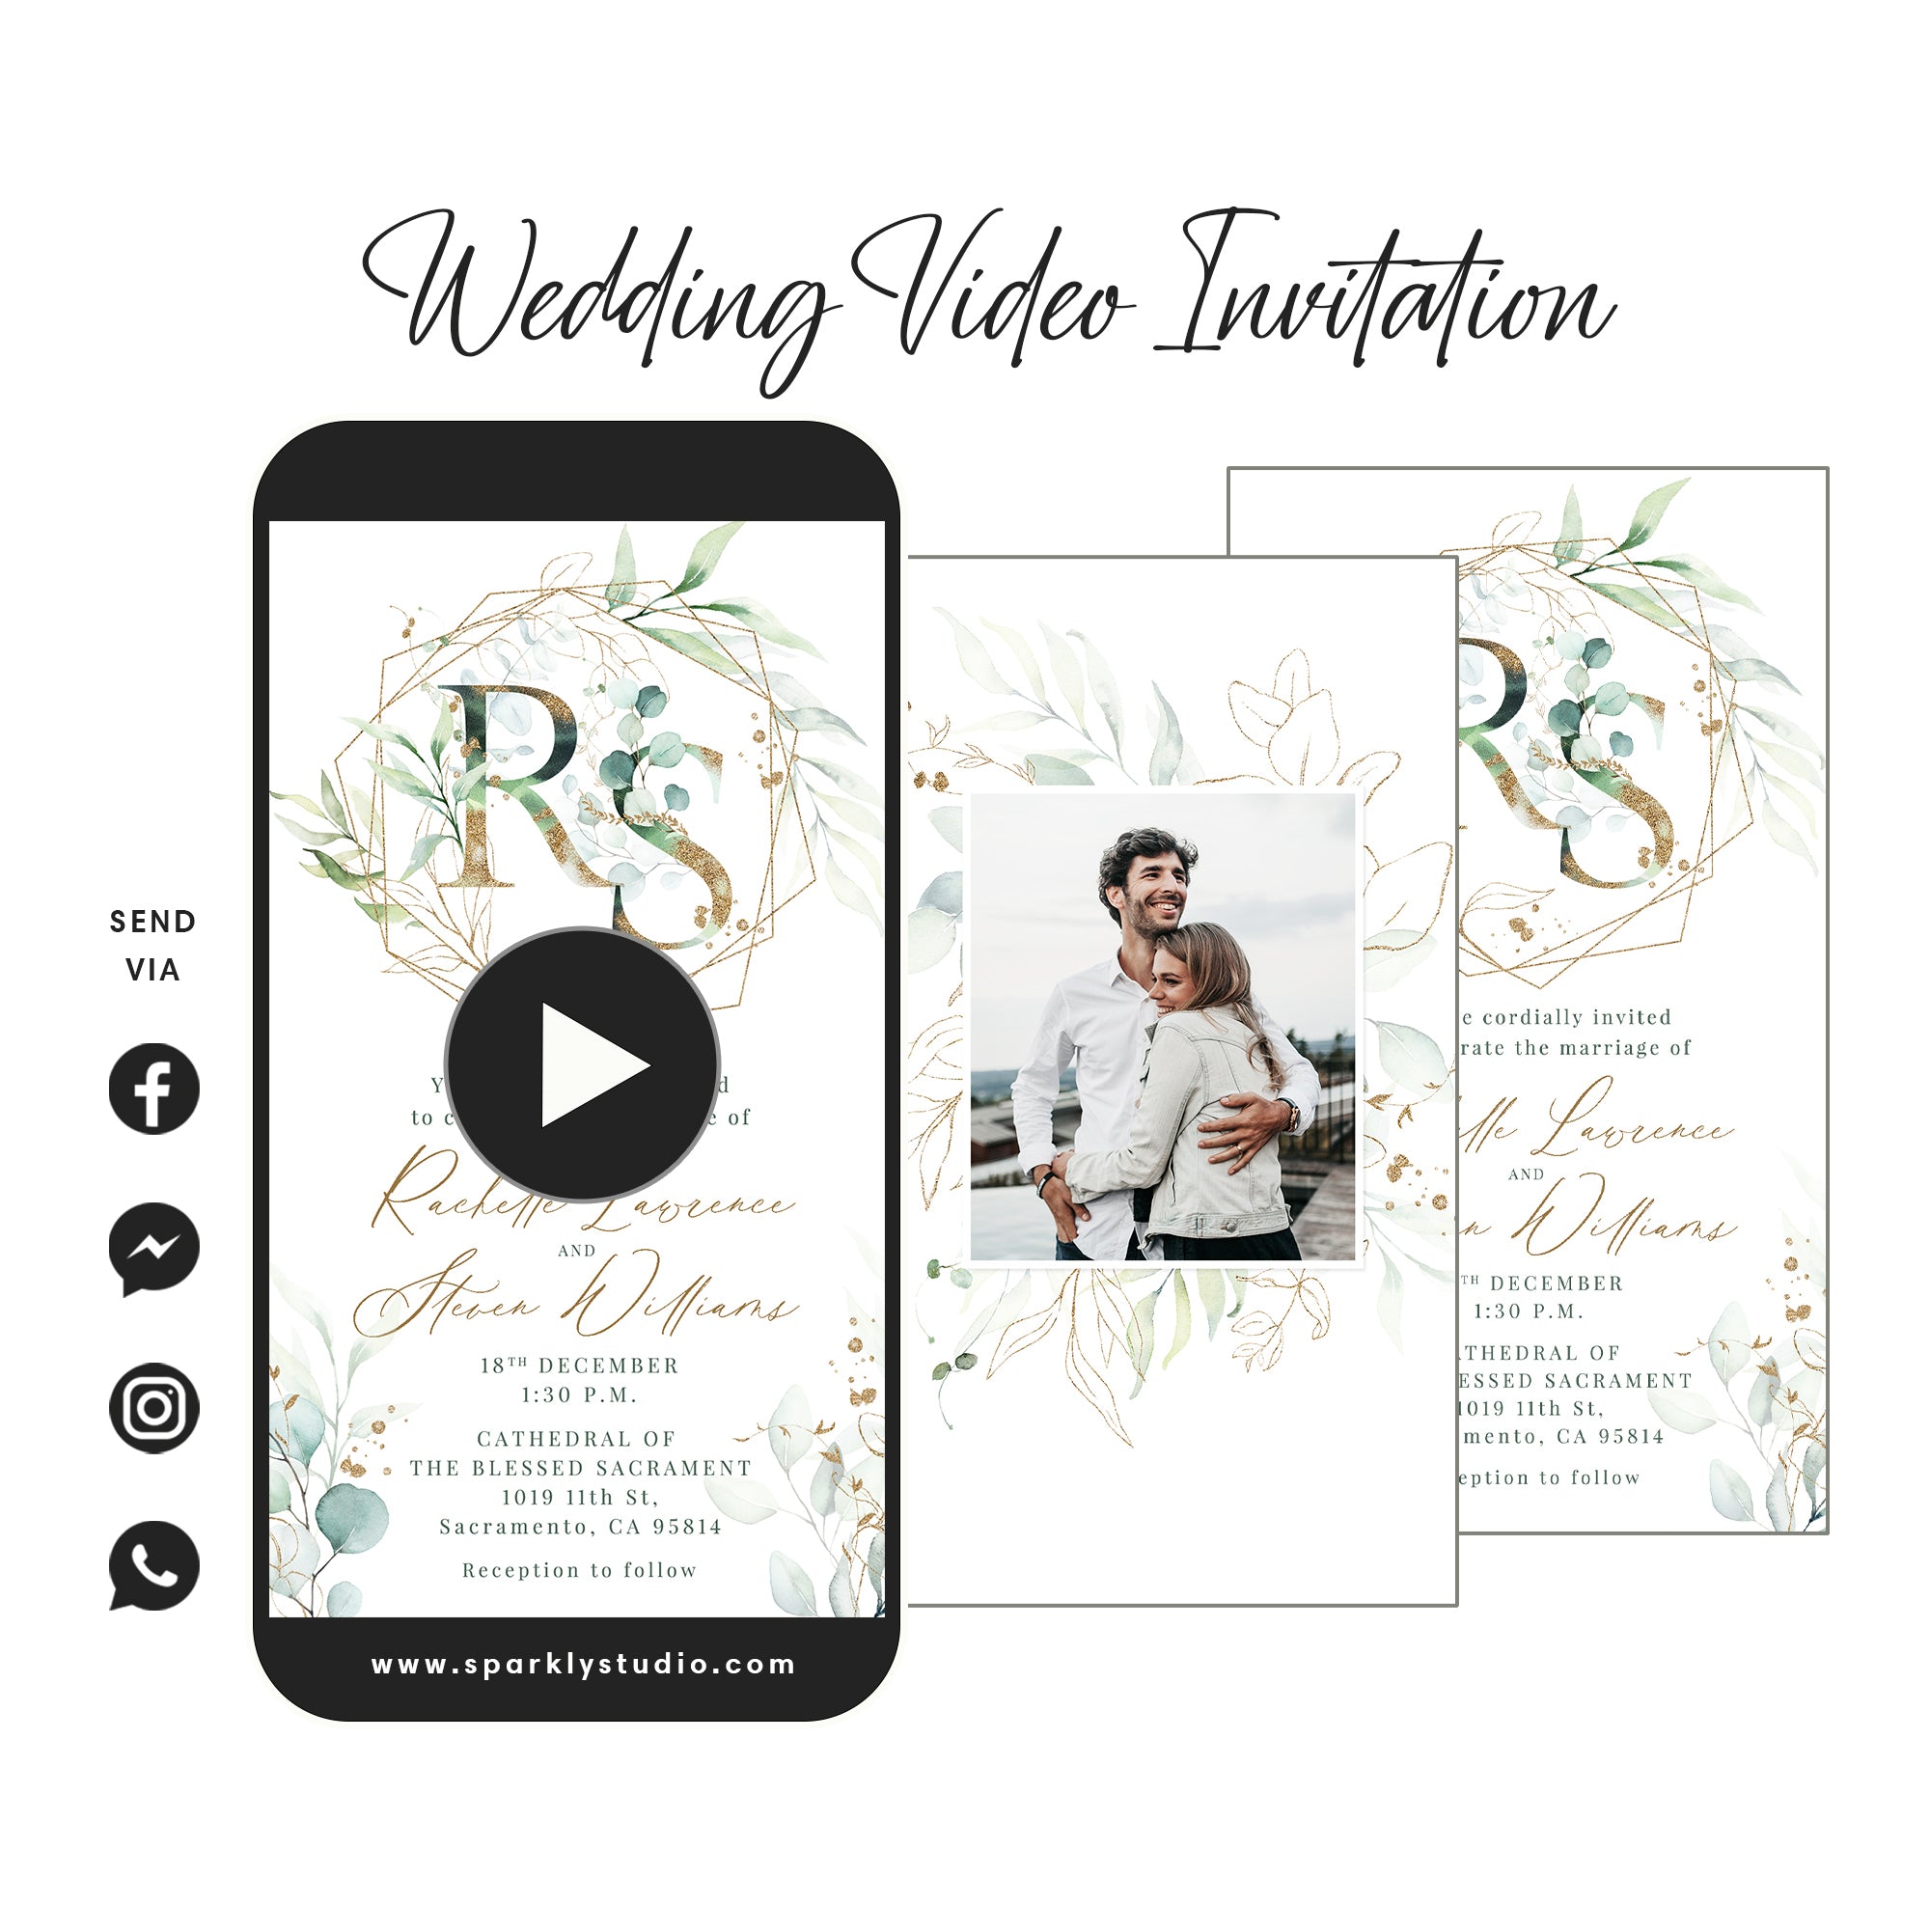 Wedding Video Invitation 